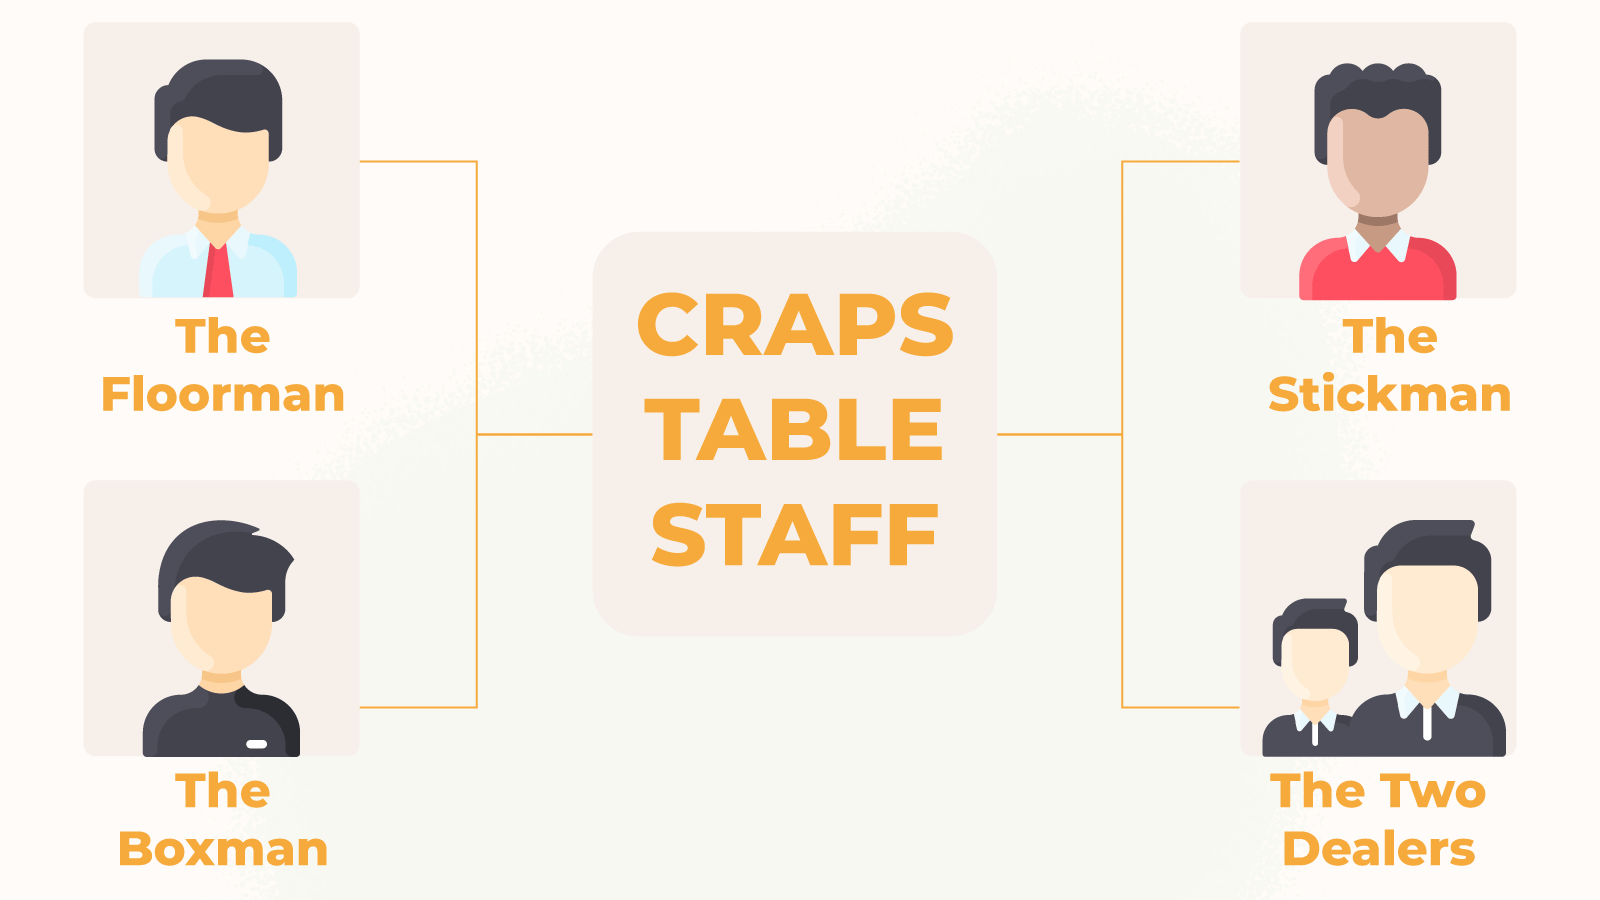 Craps Table Staff